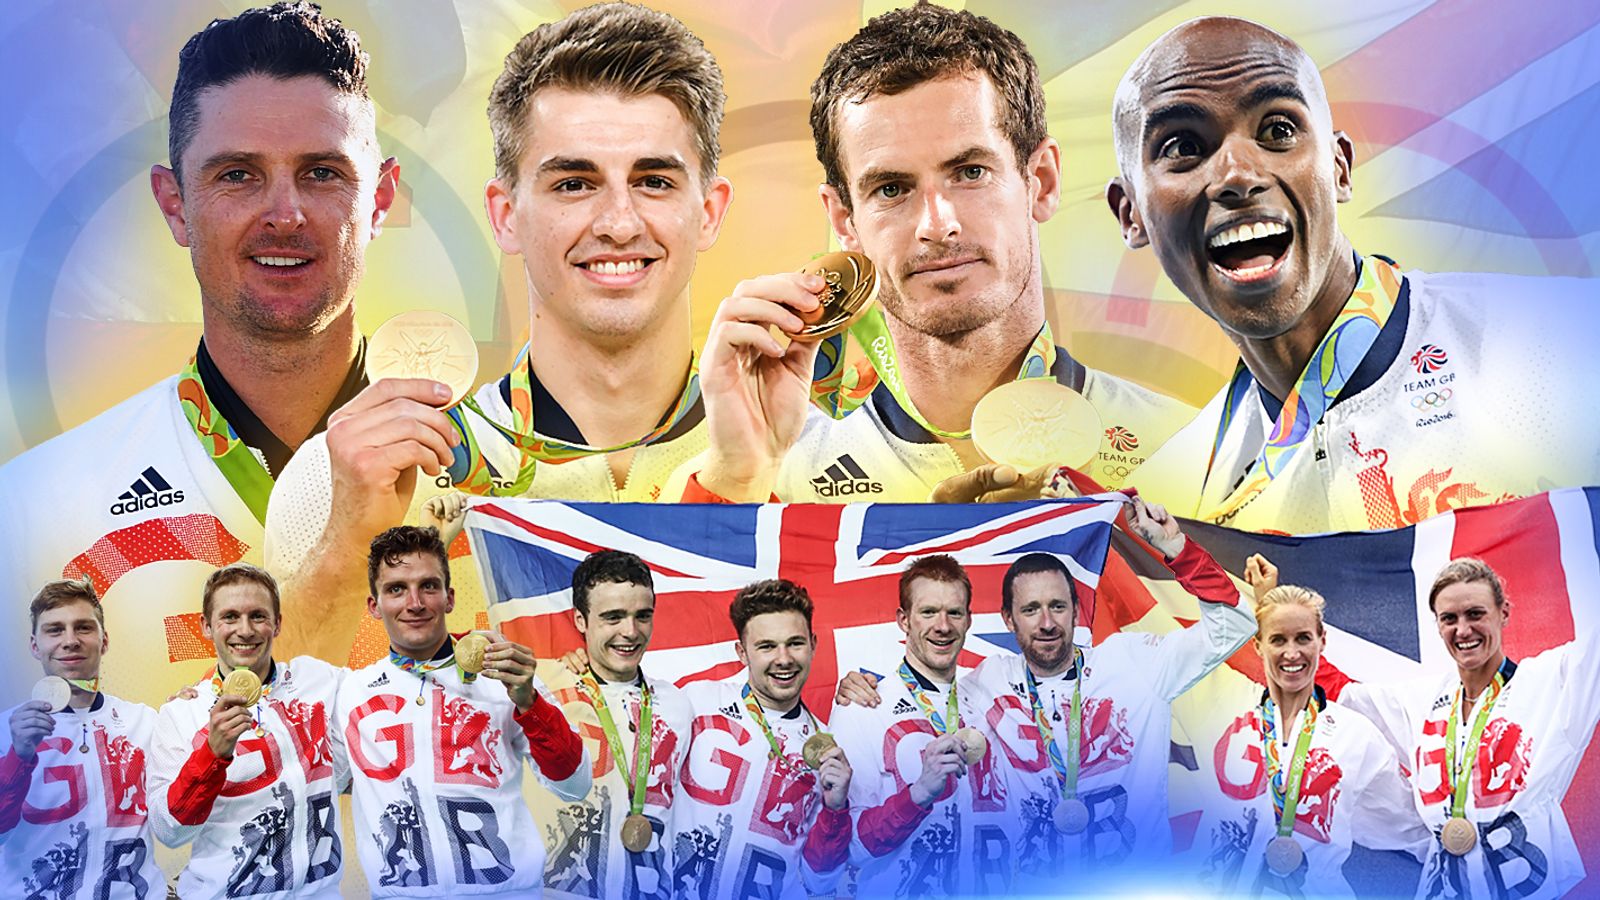 Team GB's medal winners from Rio 2016 Olympics | Olympics ...